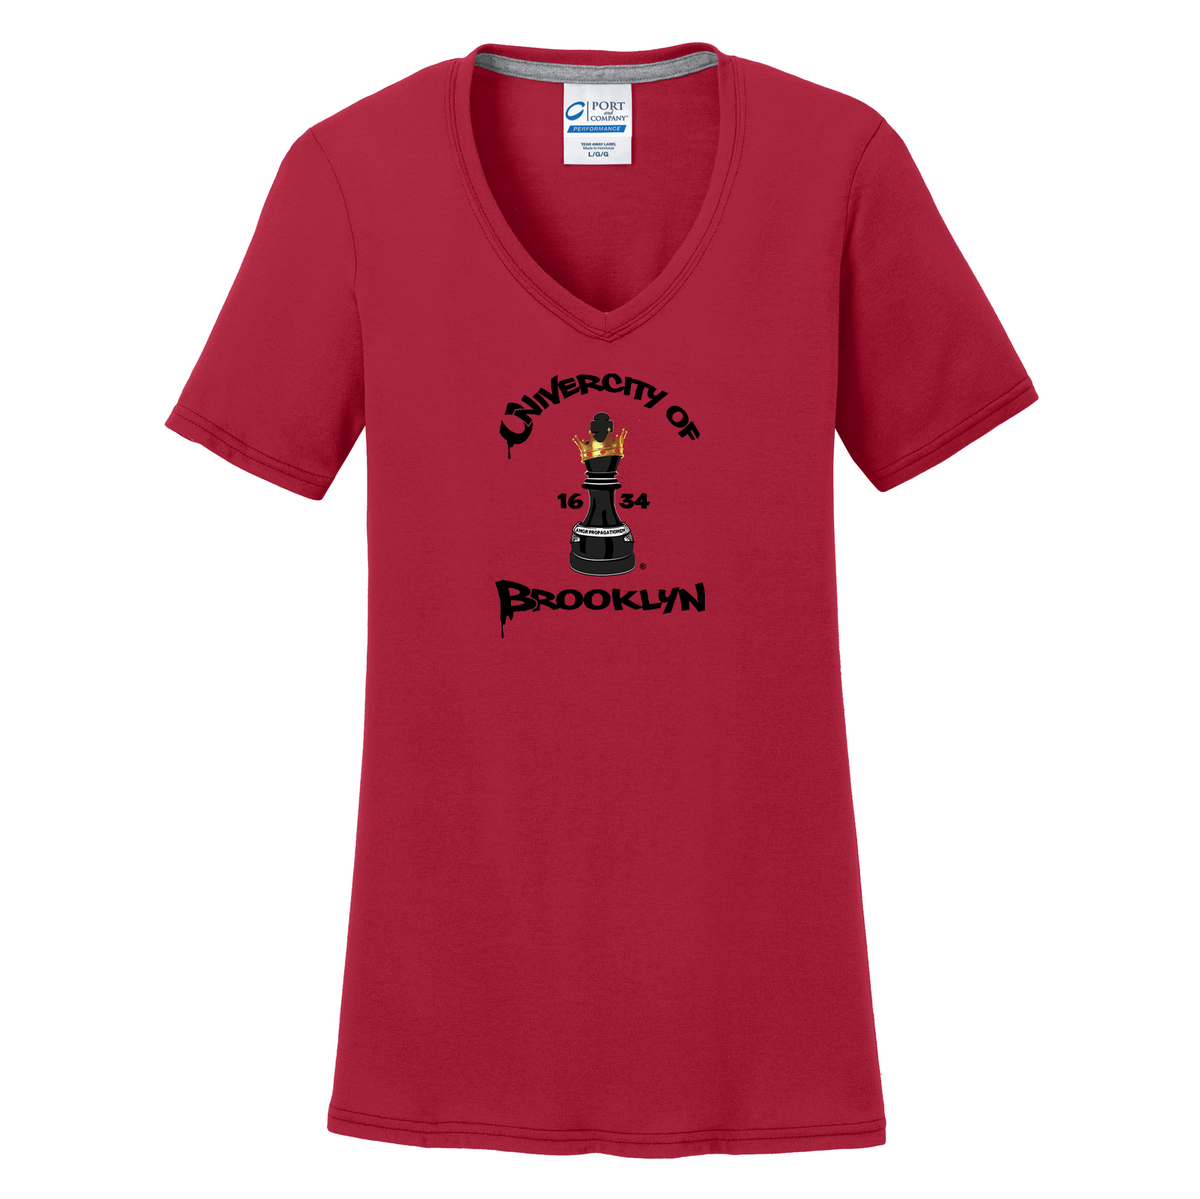 UniverCity of Brooklyn Women's T-Shirt